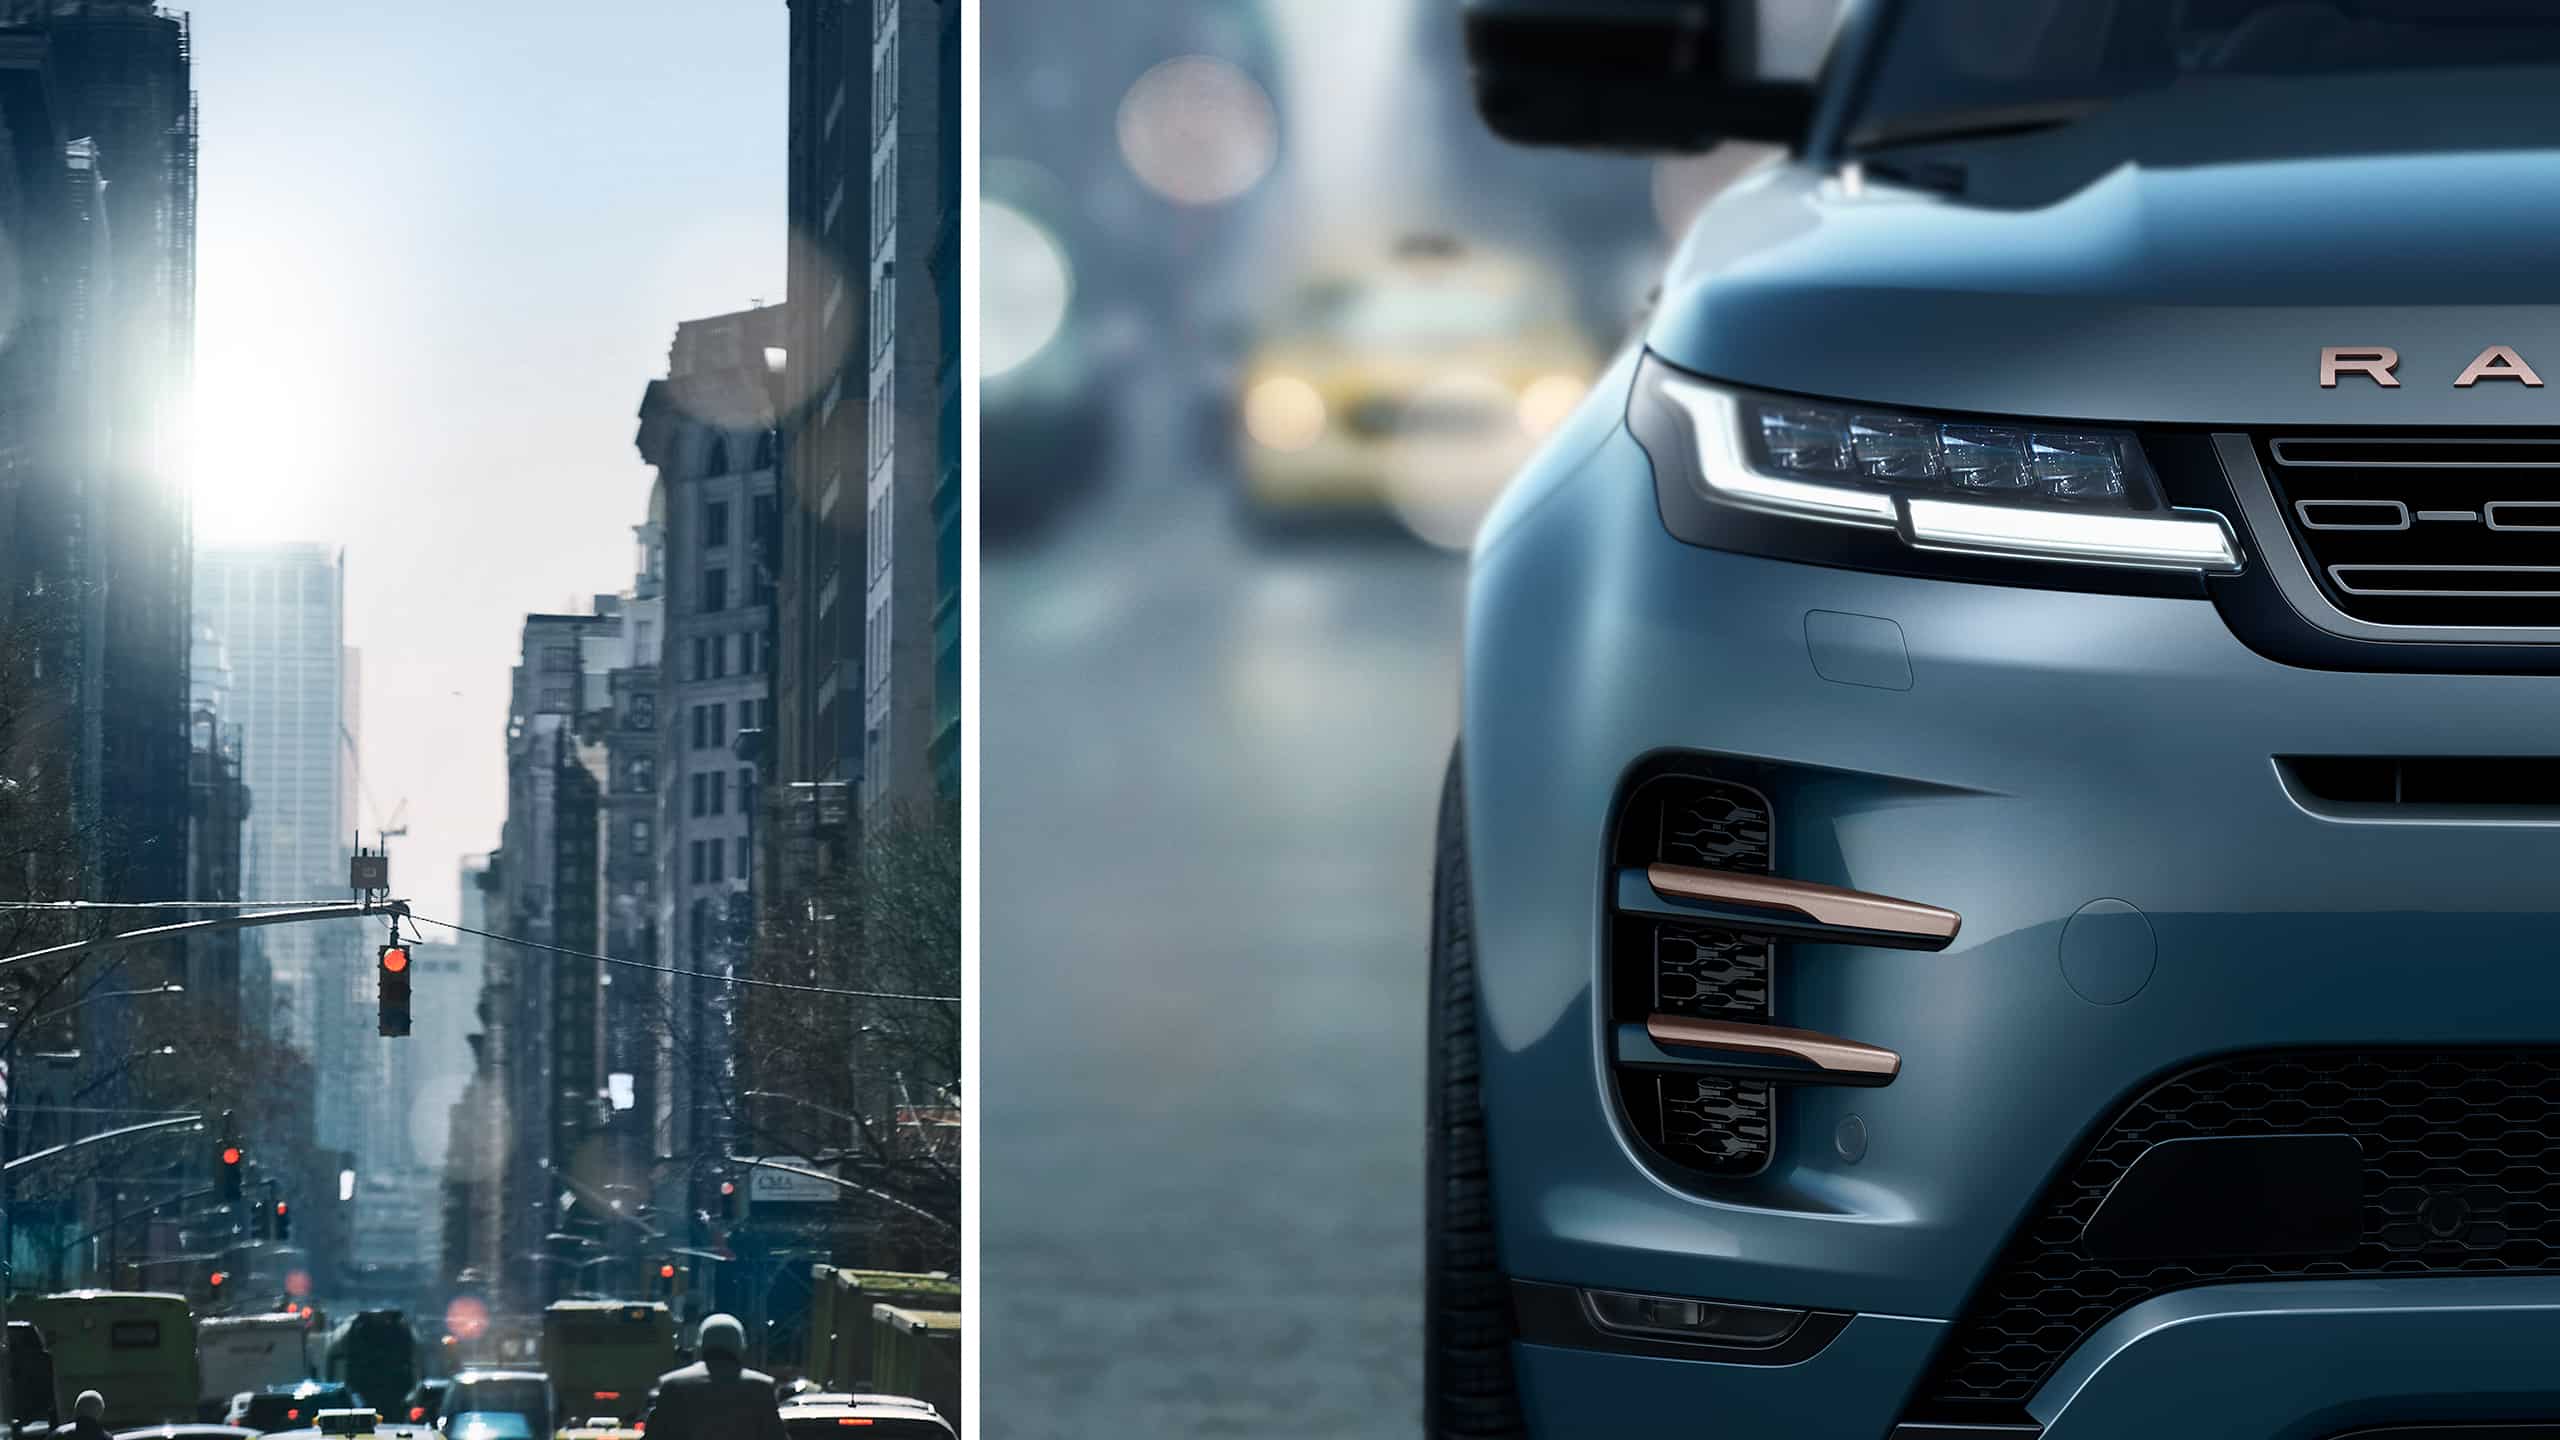 Montage of the Range Rover Evoque & city traffic